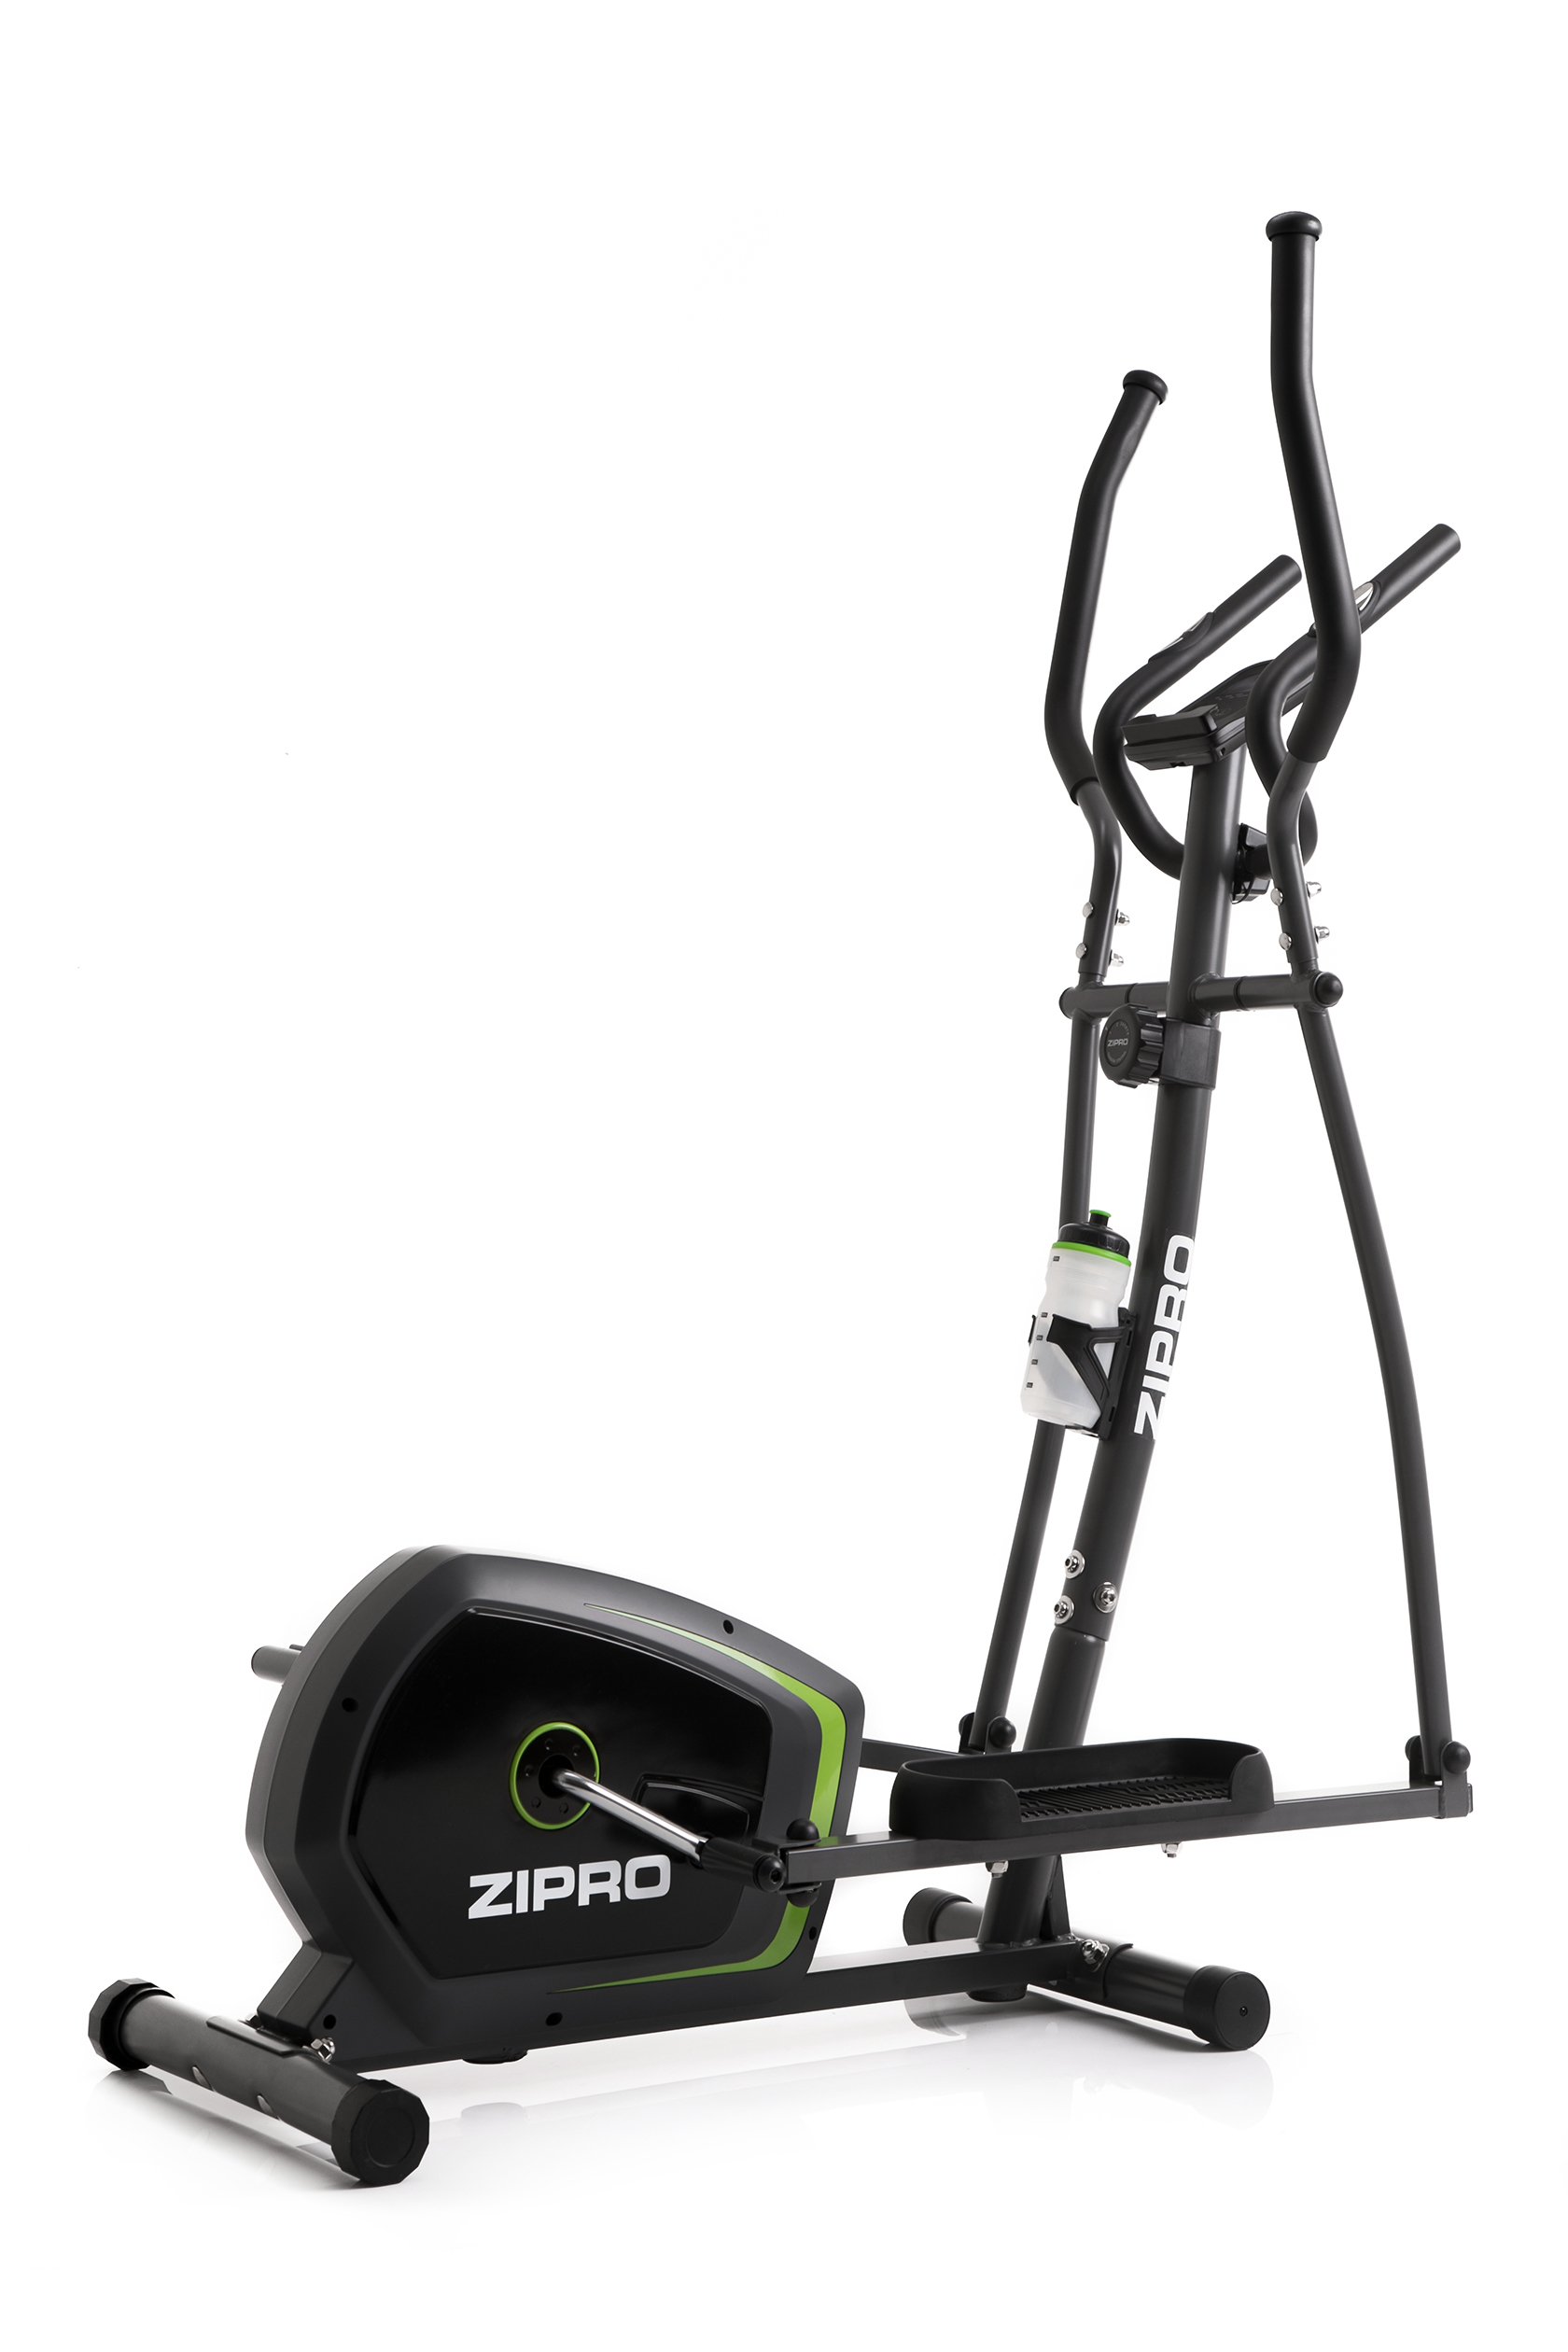 Biciclete fitness - Bicicleta eliptica Zipro Neon, volanta 7kg, greutate maxima utilizator 120kg